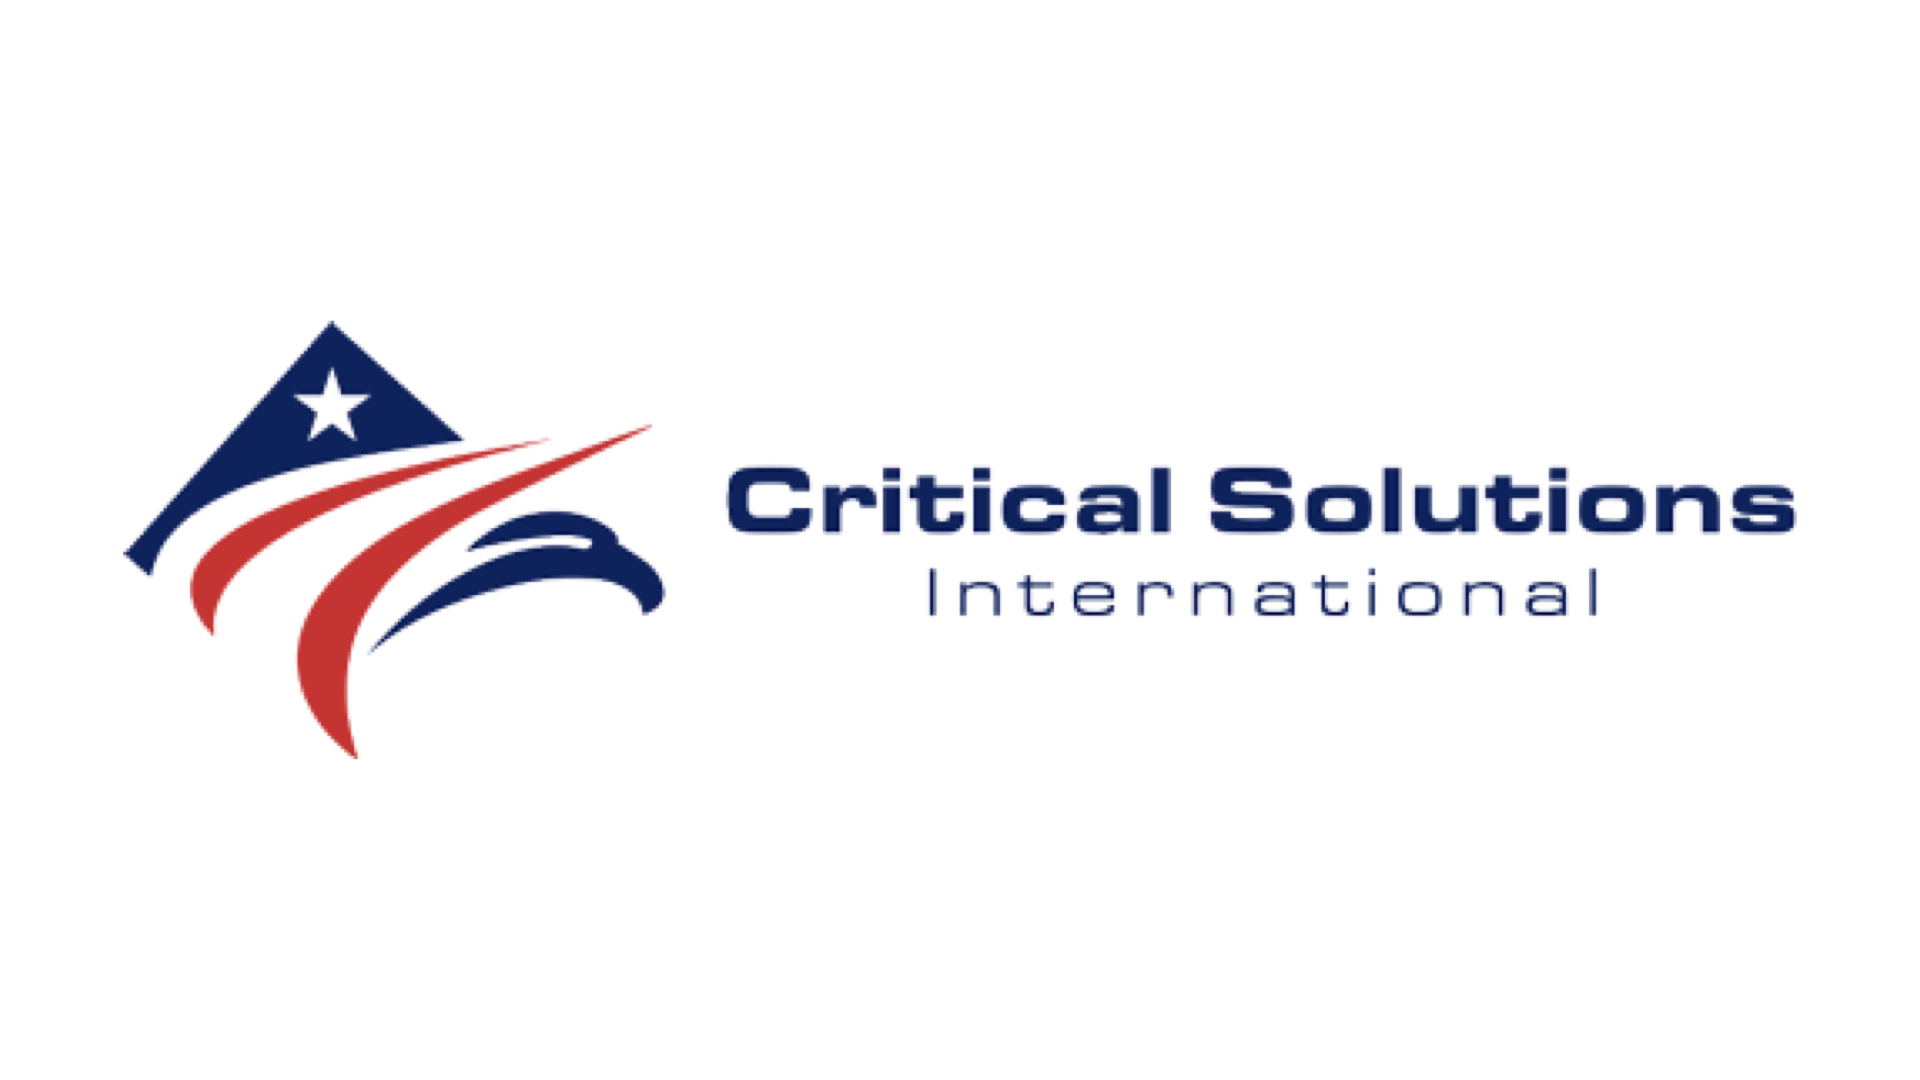 Logo de Critical Solutions International